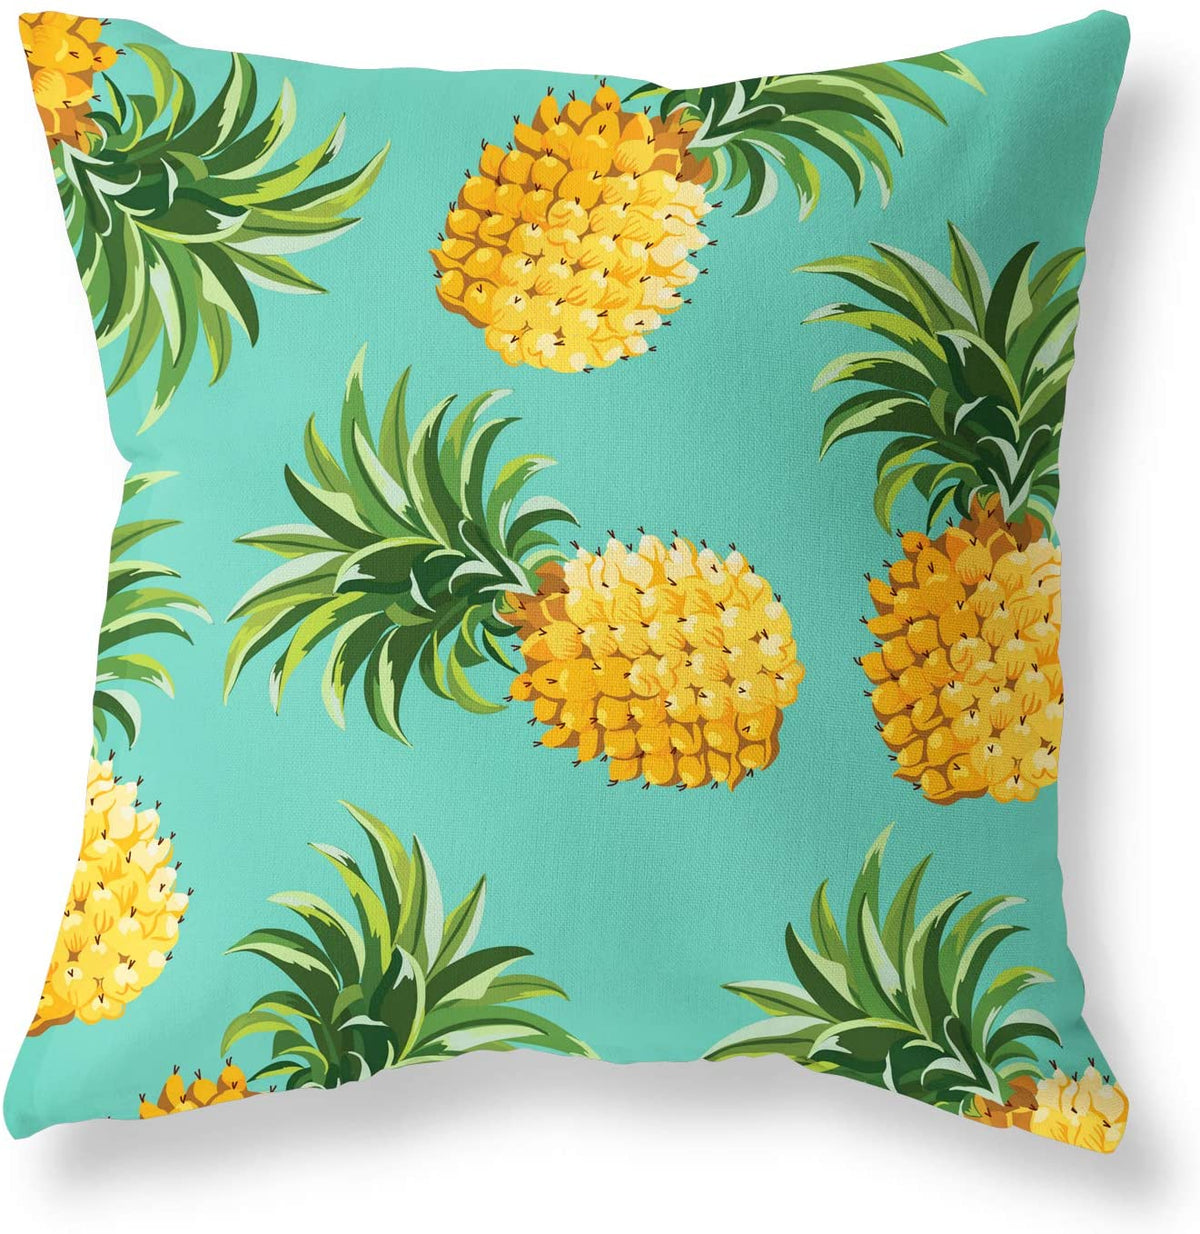 Pineapple Cushion Covers